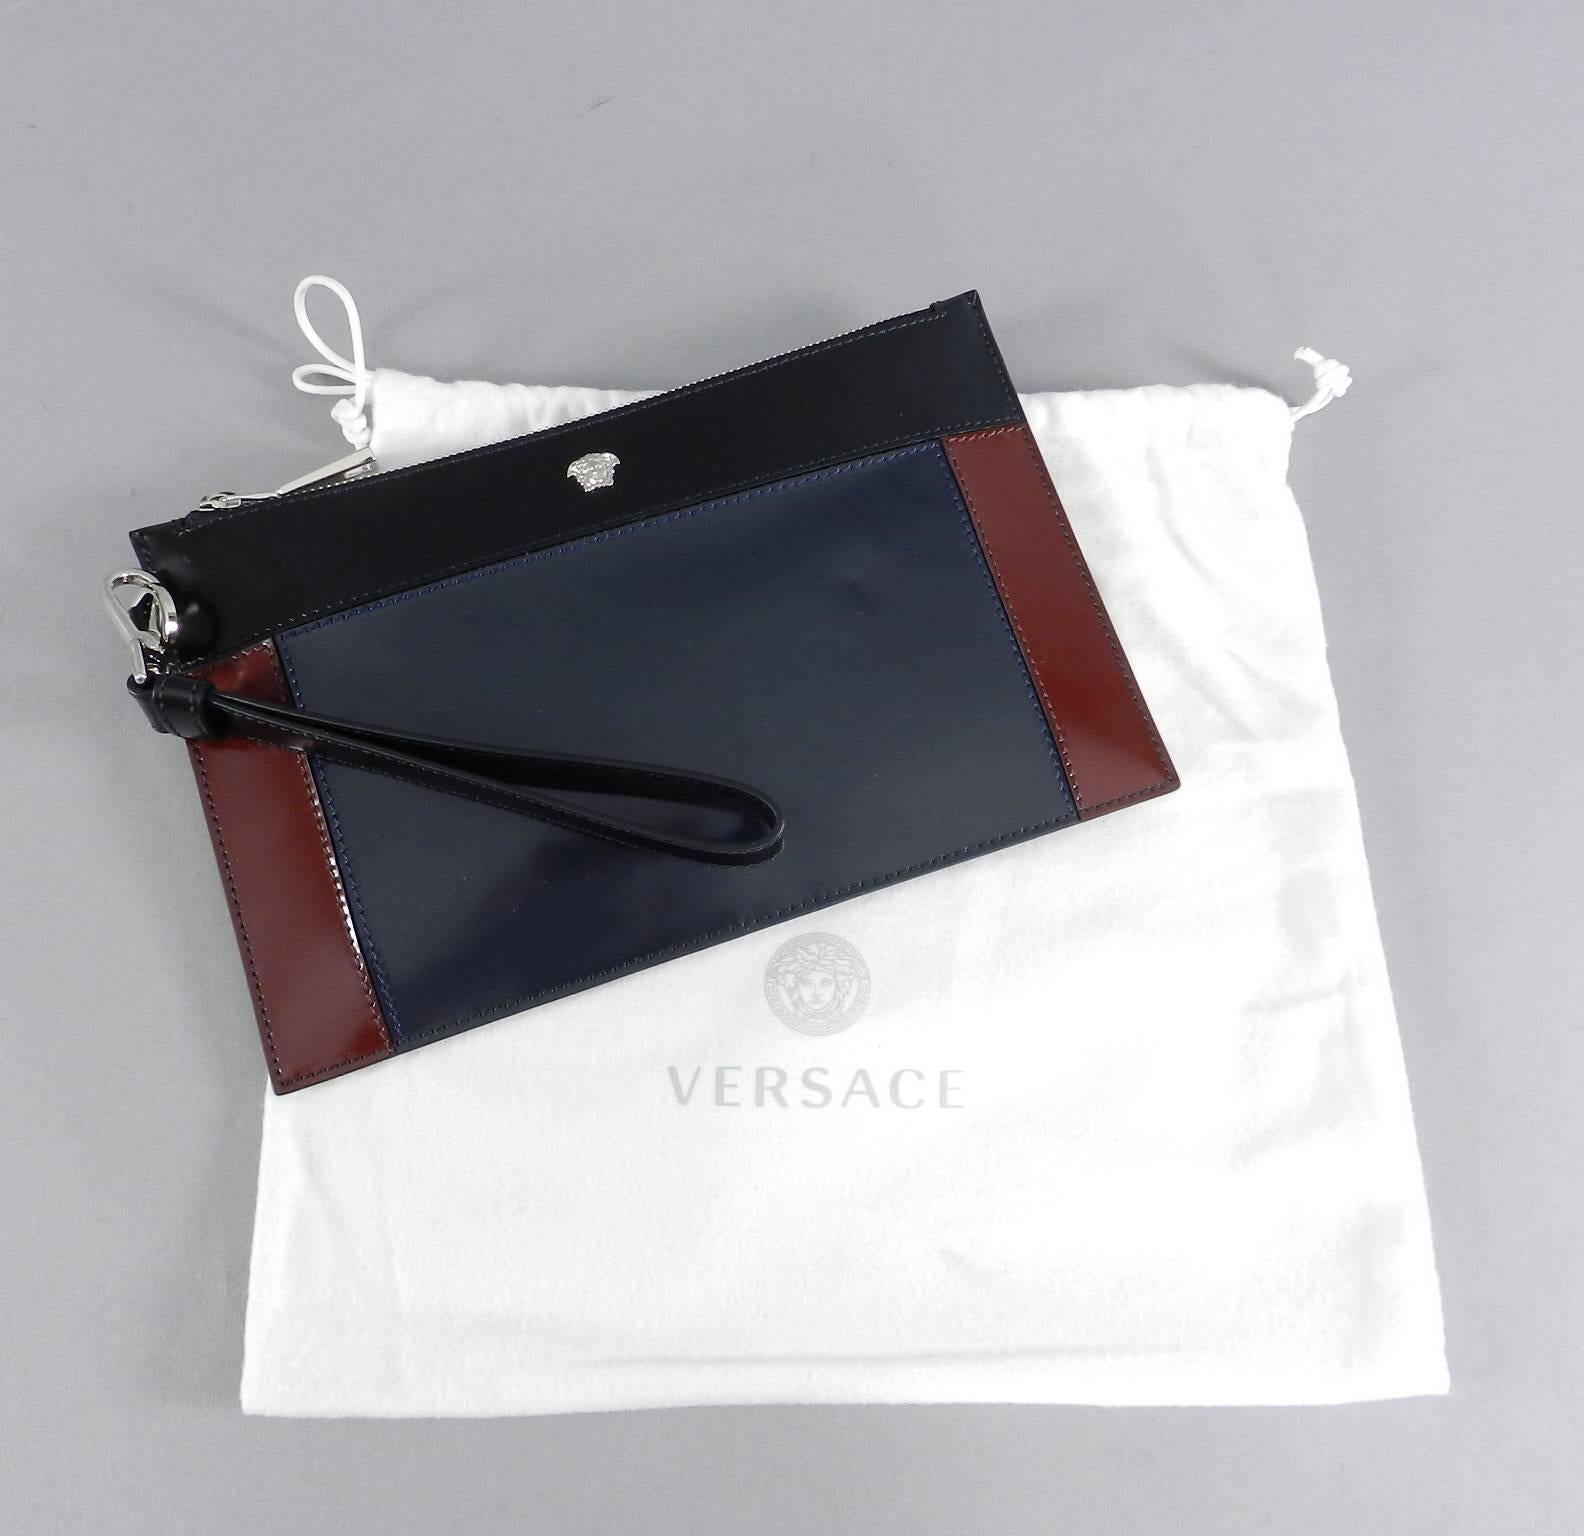 Versace Color Block Leather Wristlet Clutch Bag 1